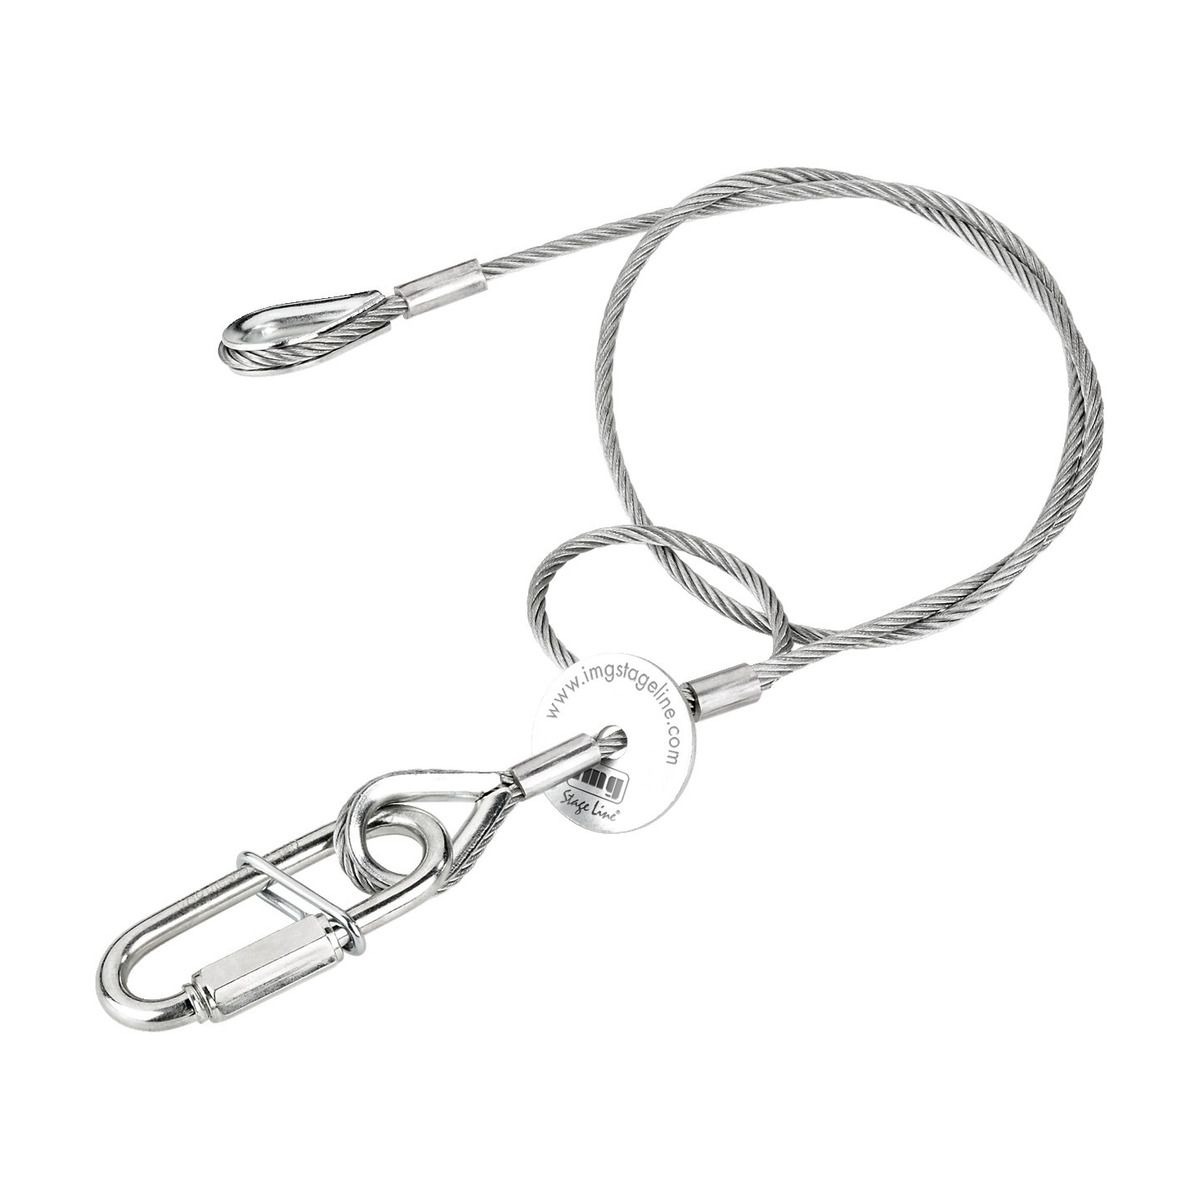 TAR-603SAVE | Safety rope, 60 cm-0